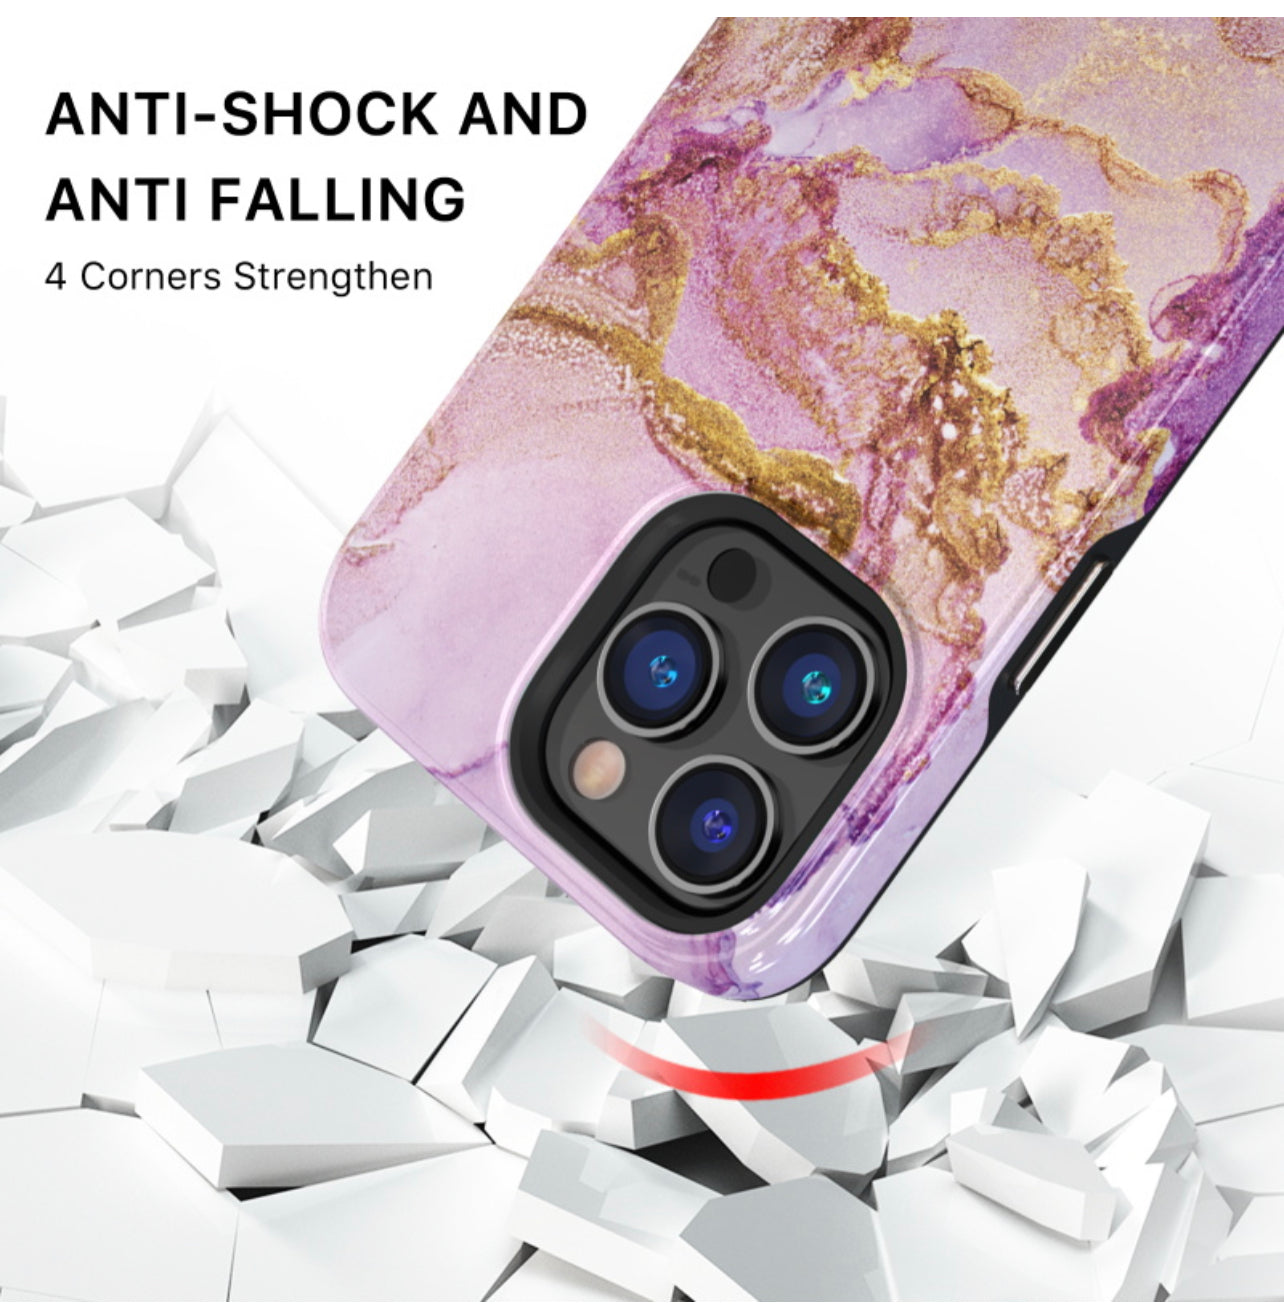 MyBat Pro Fuse Series MagSafe Case for Apple iPhone 14 Pro Max (6.7) - Purple Marble